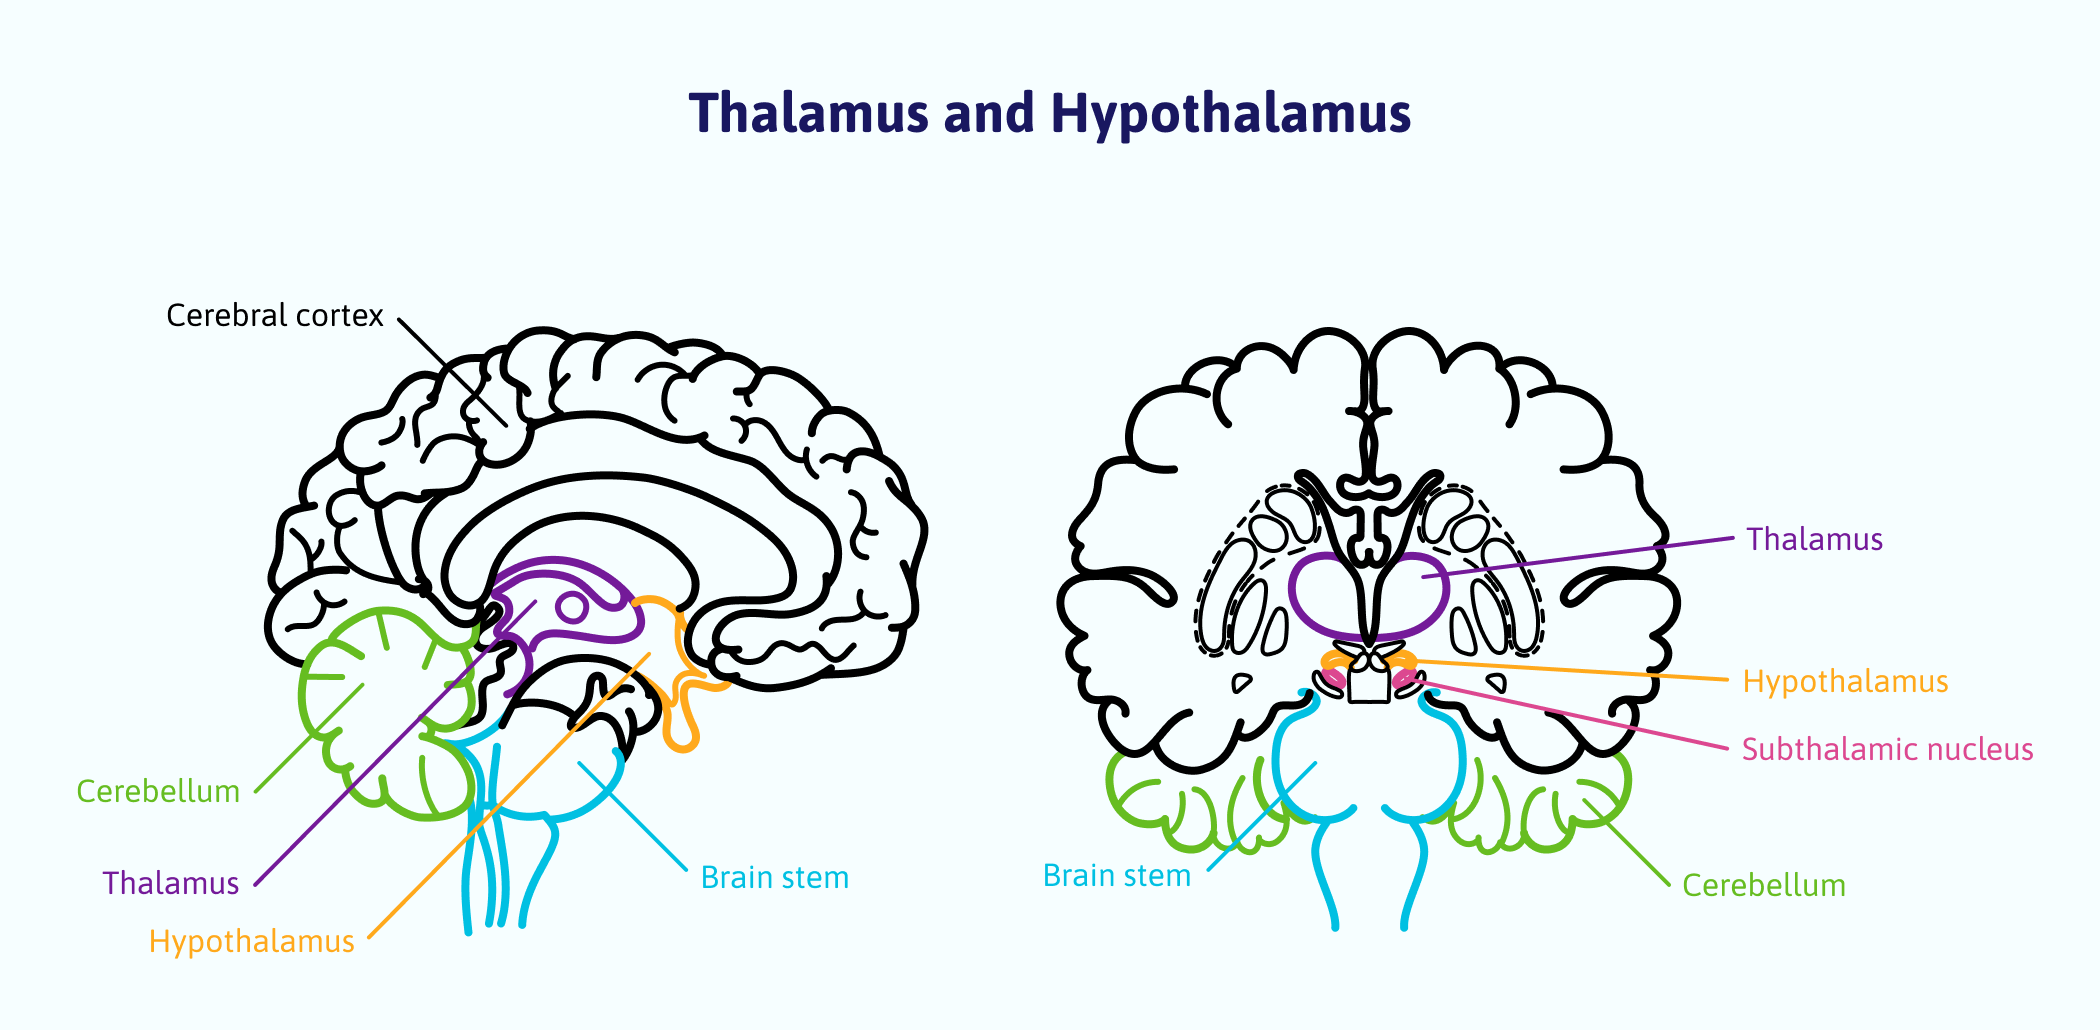 The Thalamus and Hypothalamus